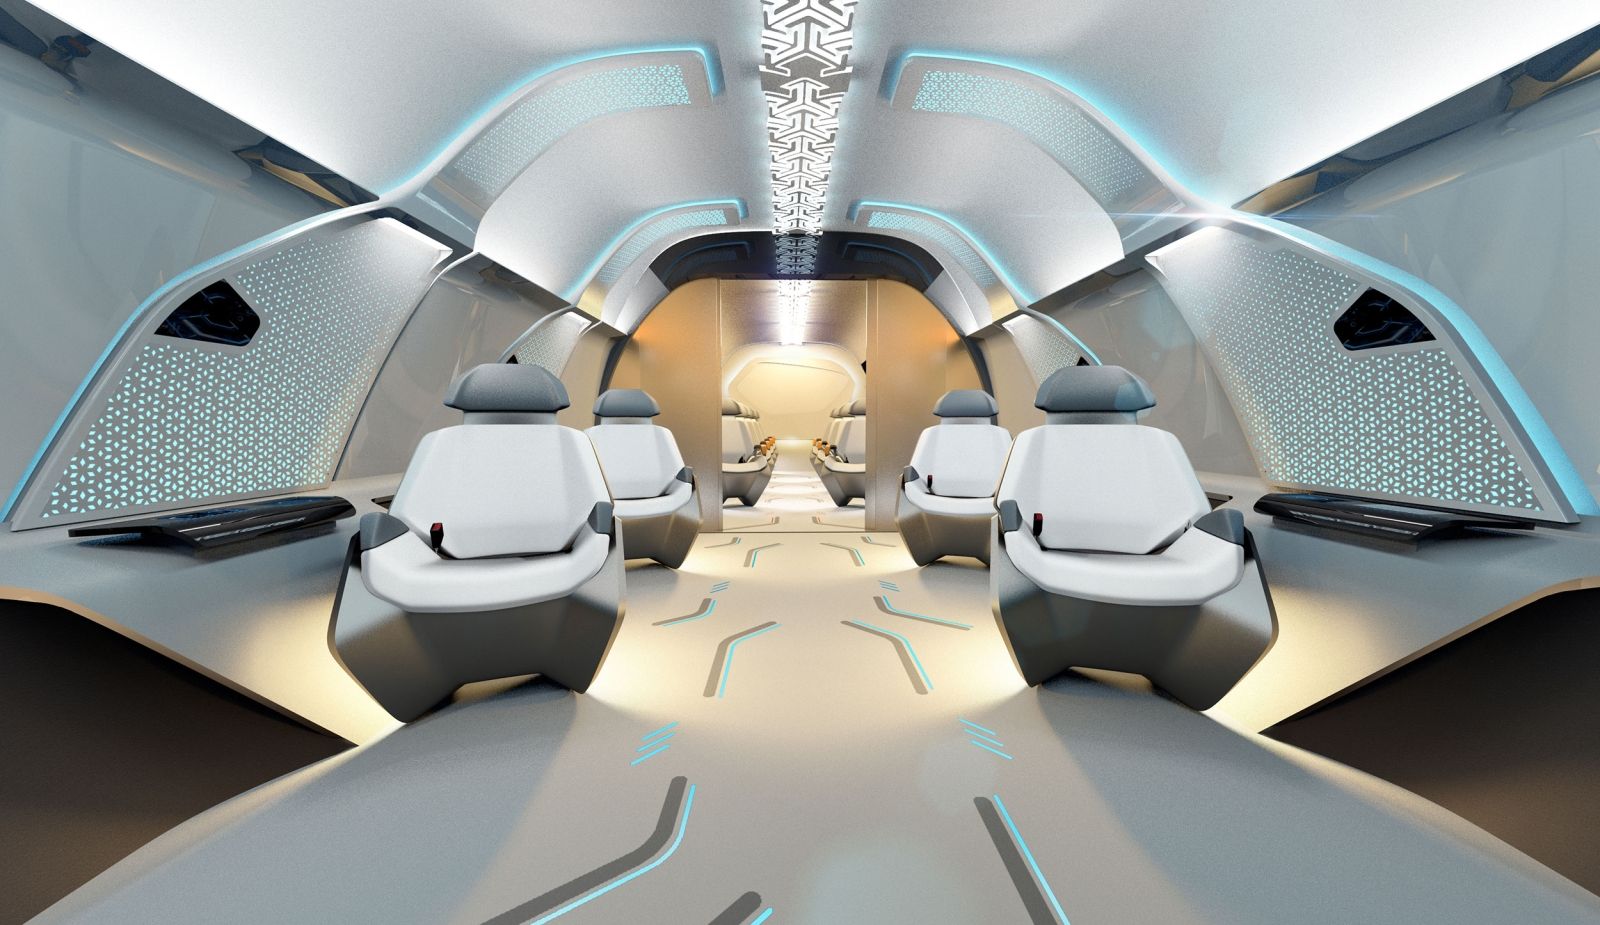 Virgin Hyperloop interior cabin